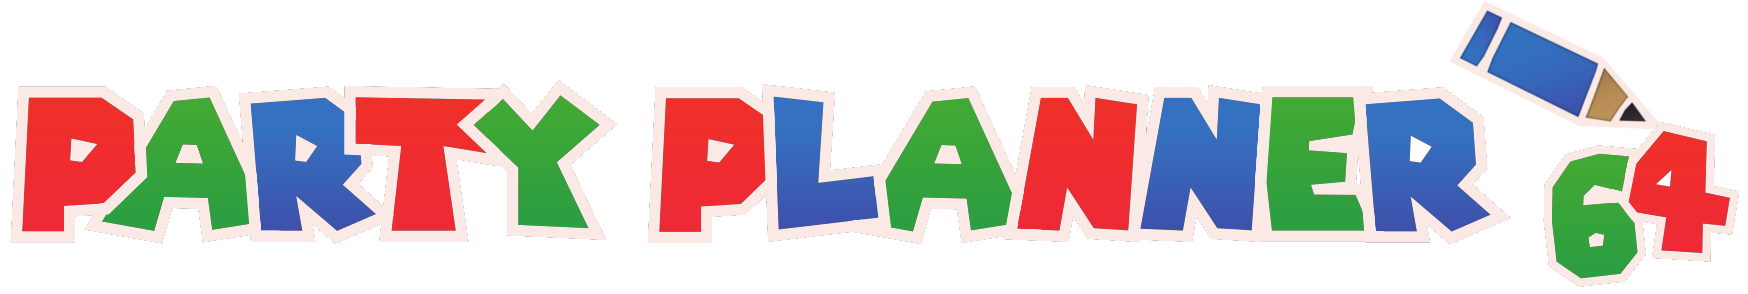 PartyPlanner64 logo